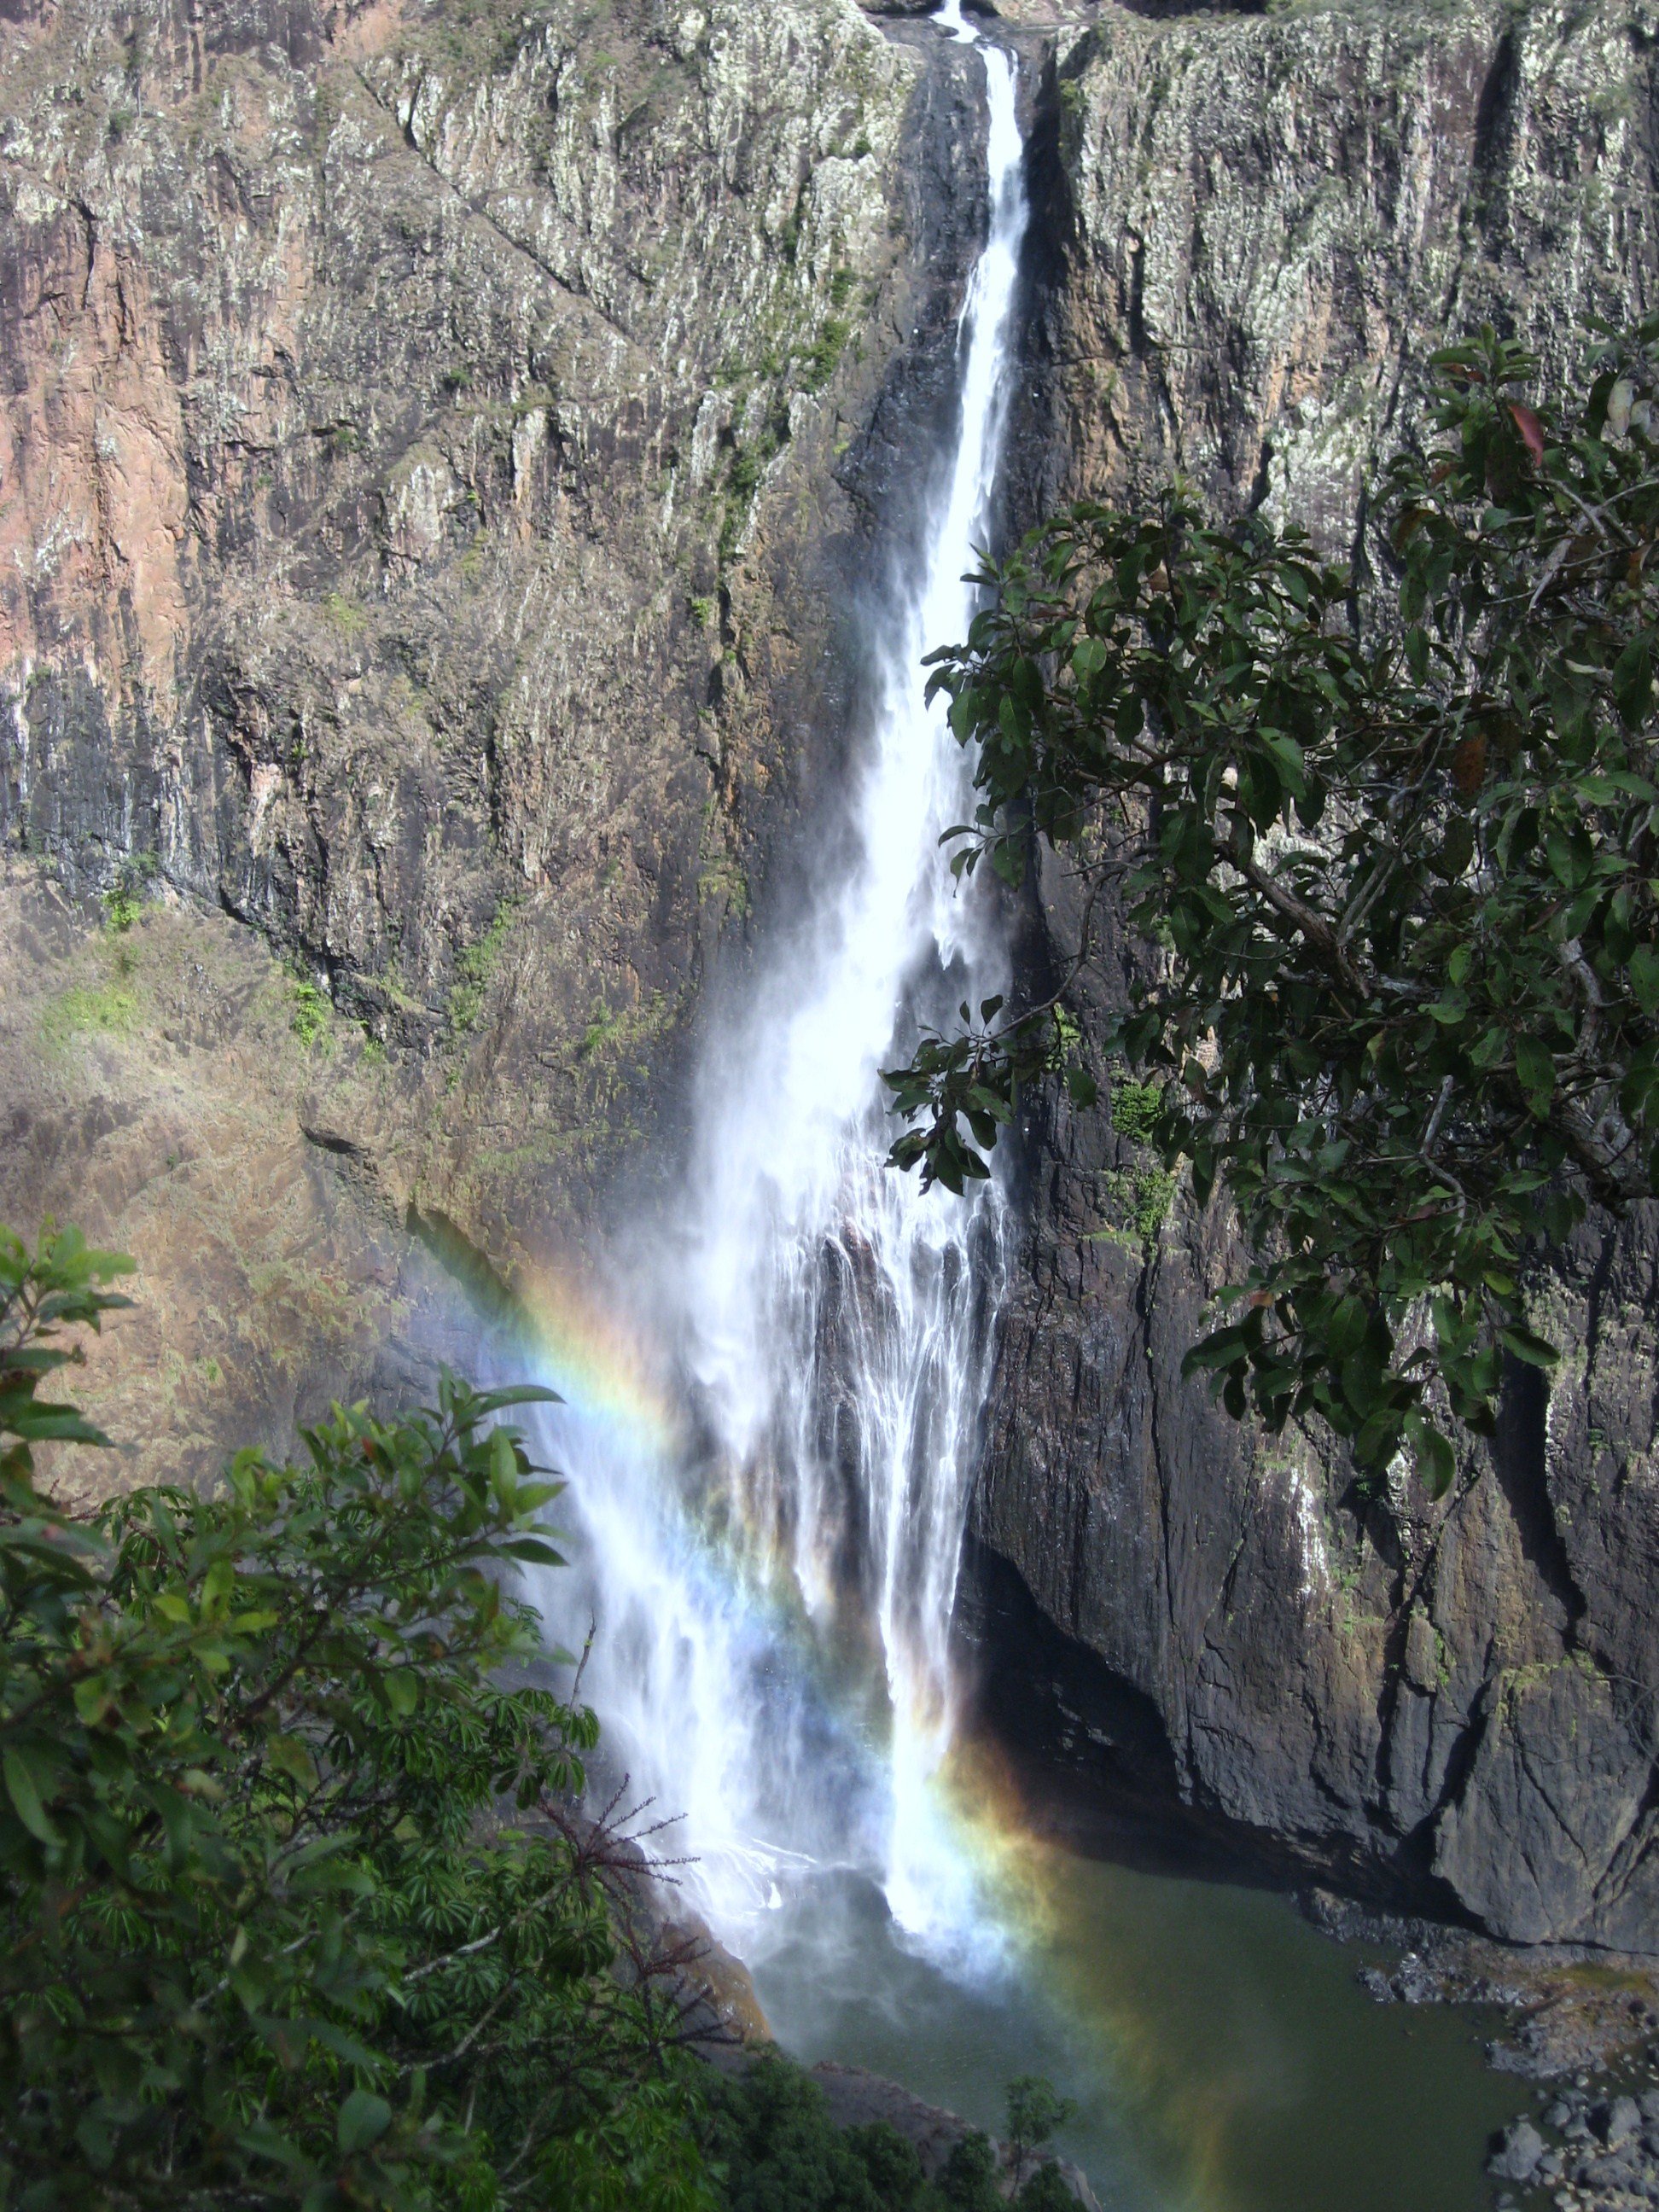 The highest permanent single drop waterfall in Australia